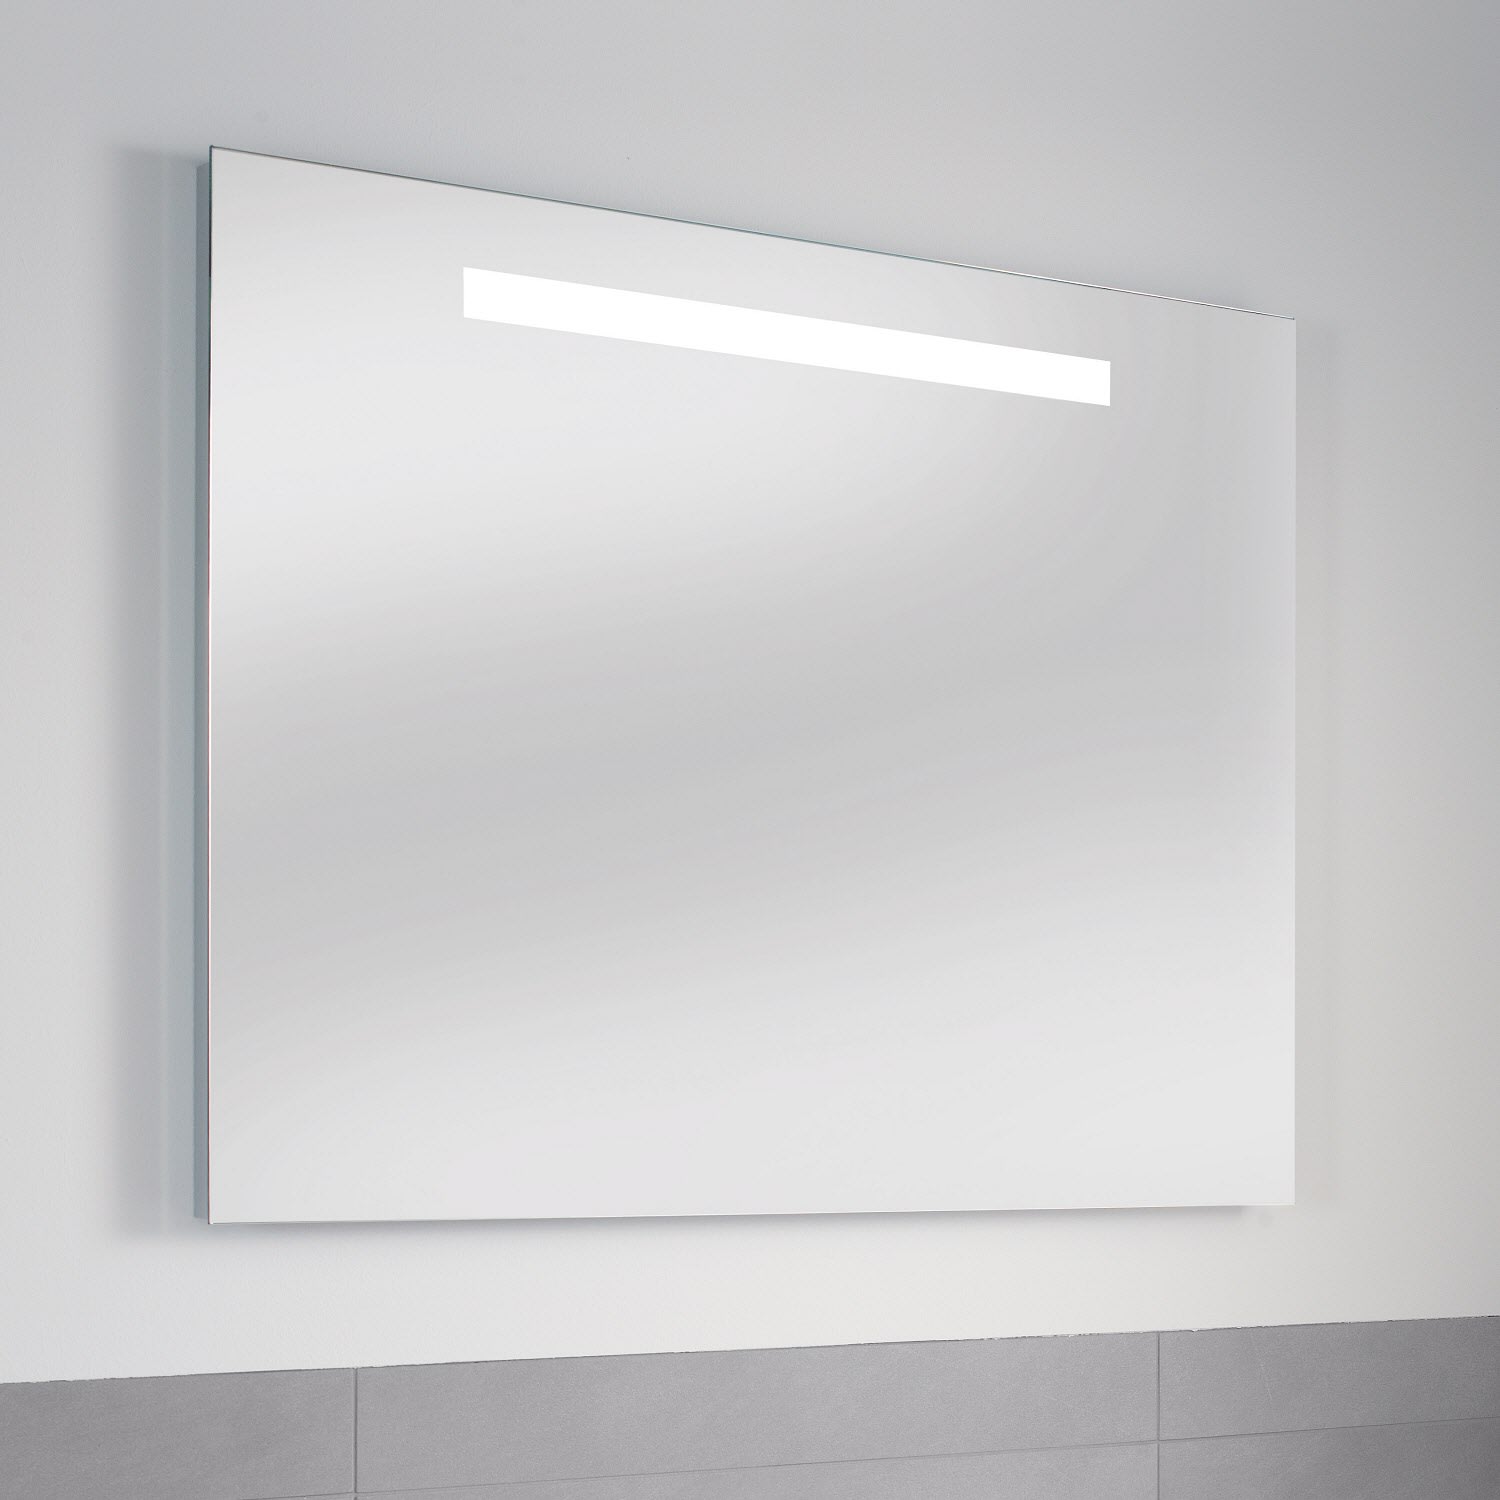 & LED cm Villeroy 60 x 80 - More Spiegel One See Boch A430A500 To MEGABAD